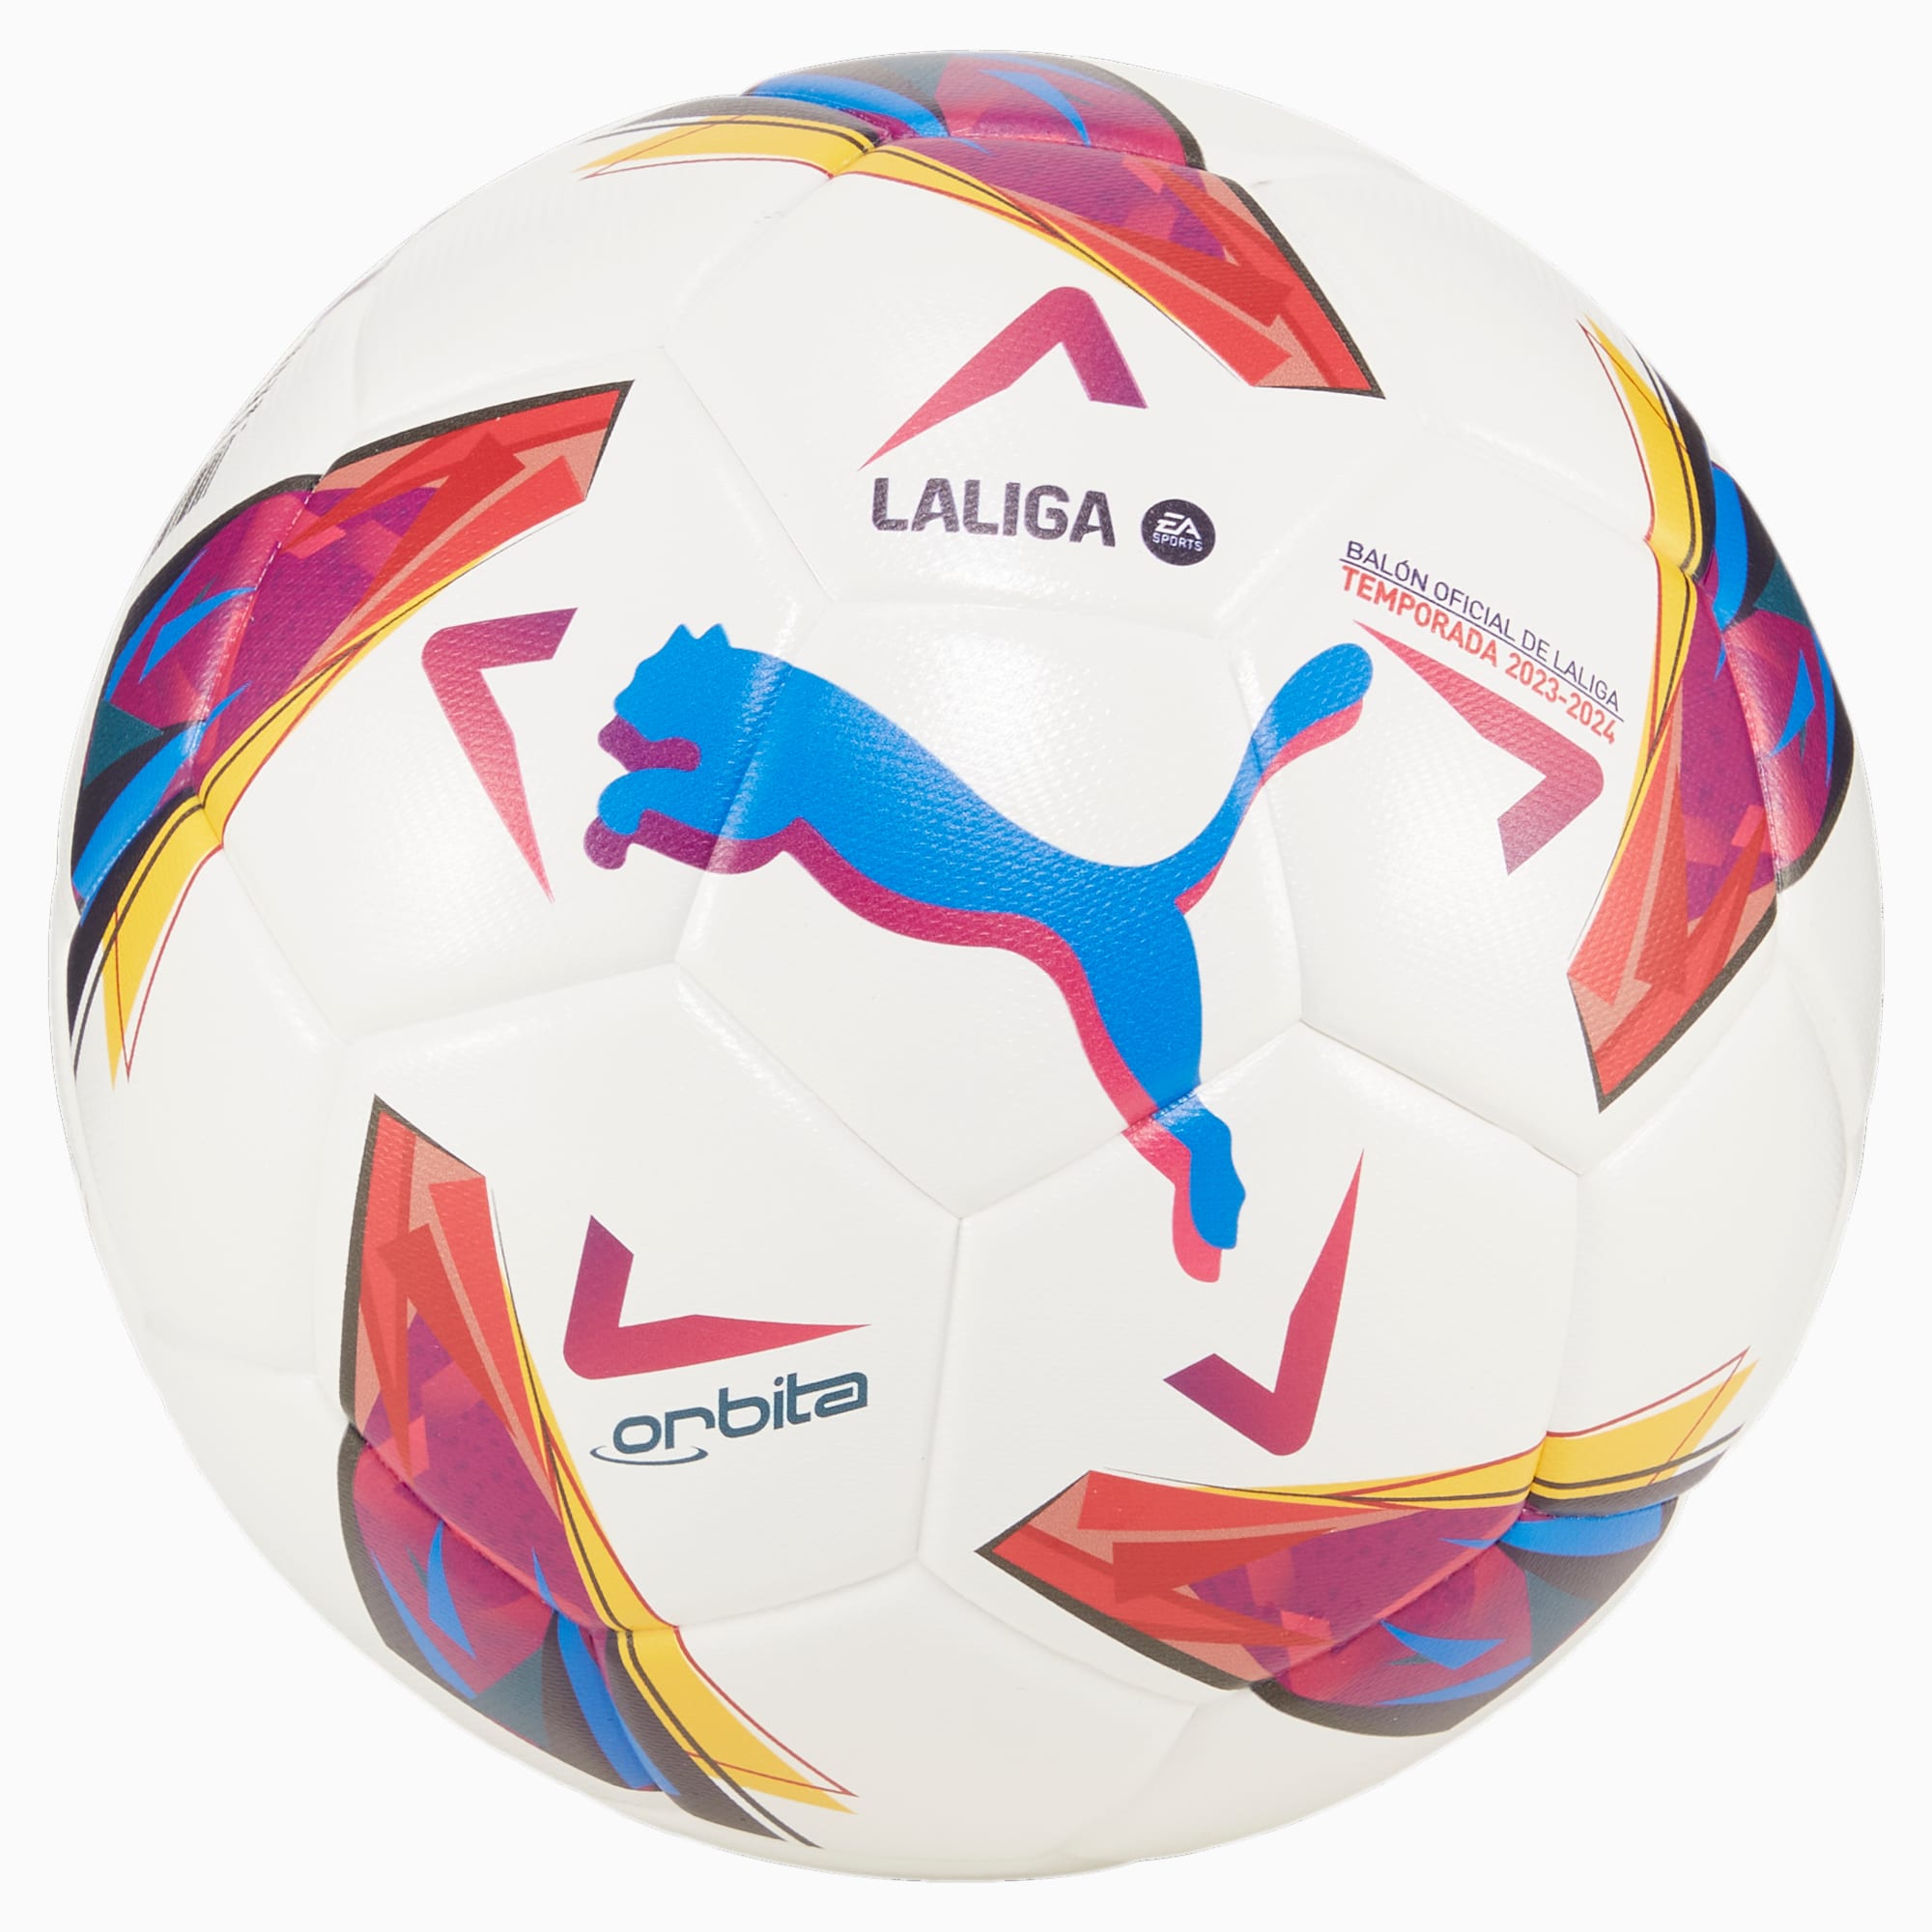 Balón de fútbol réplica Orbita La 1 |